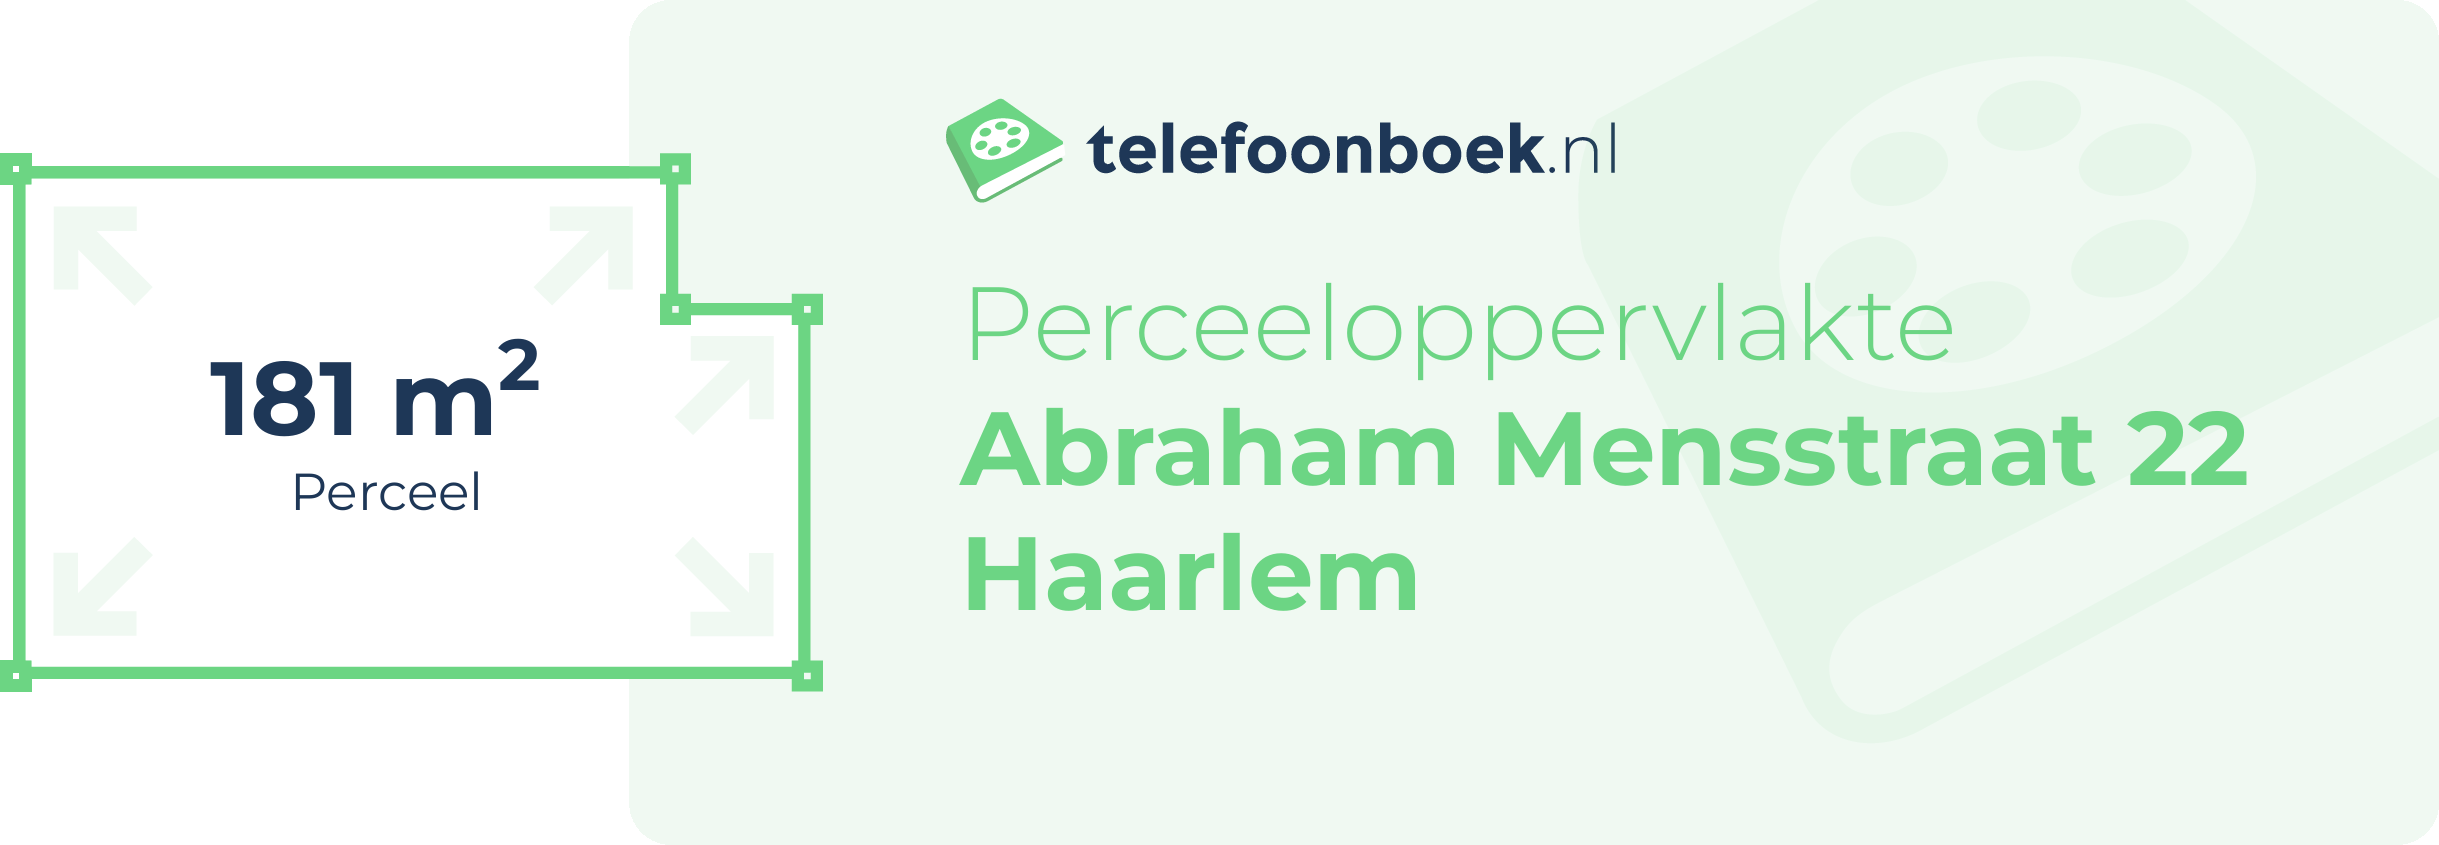 Perceeloppervlakte Abraham Mensstraat 22 Haarlem